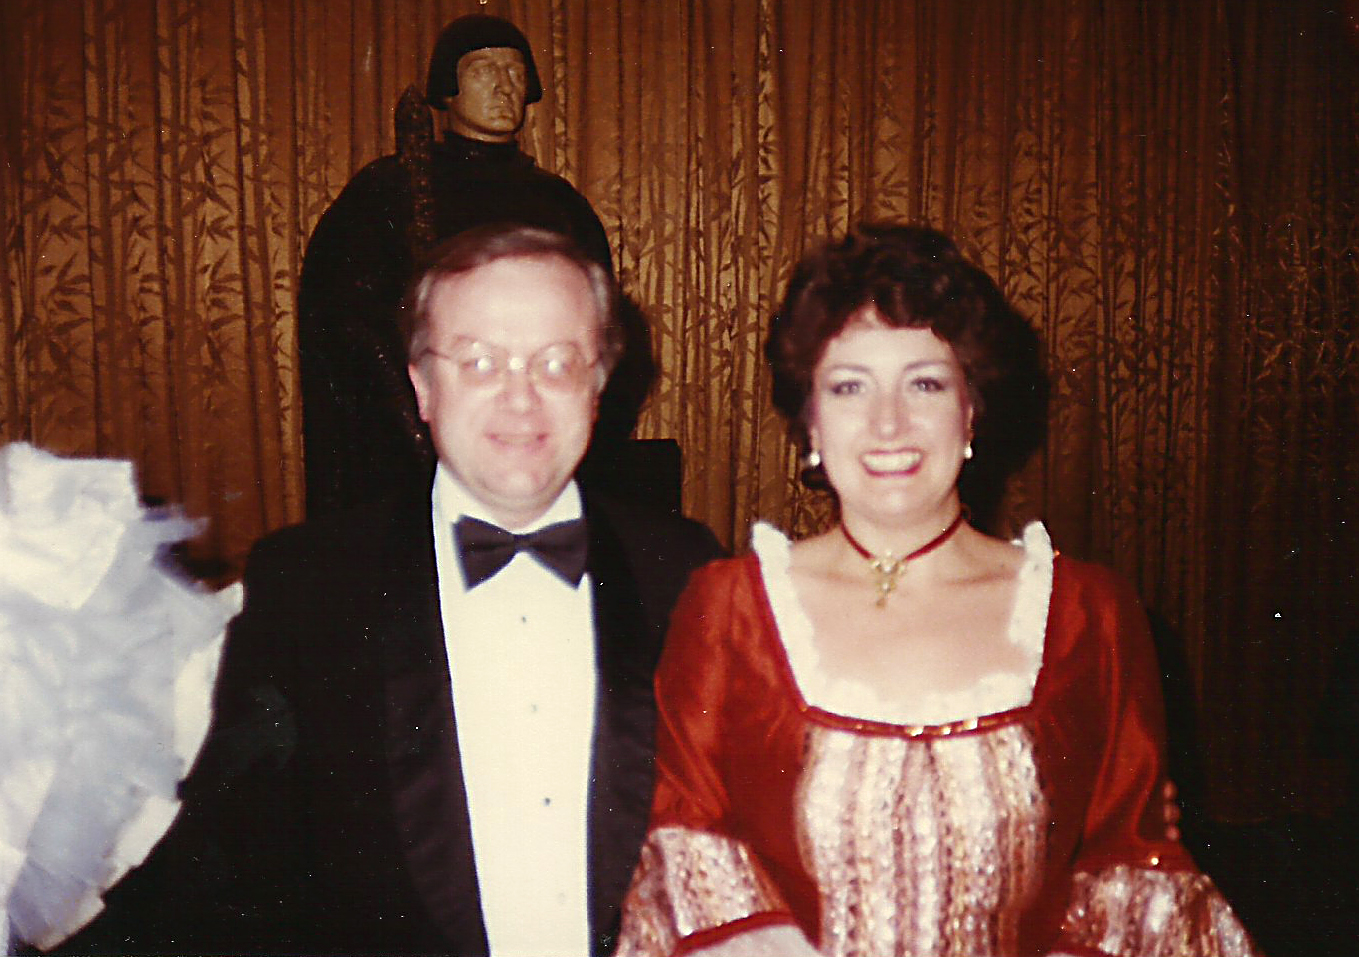 Liederkranz Studio Opera, Der Rosenkavalier, New York City, 1986 – Janice as Annina, Maestro John Balme